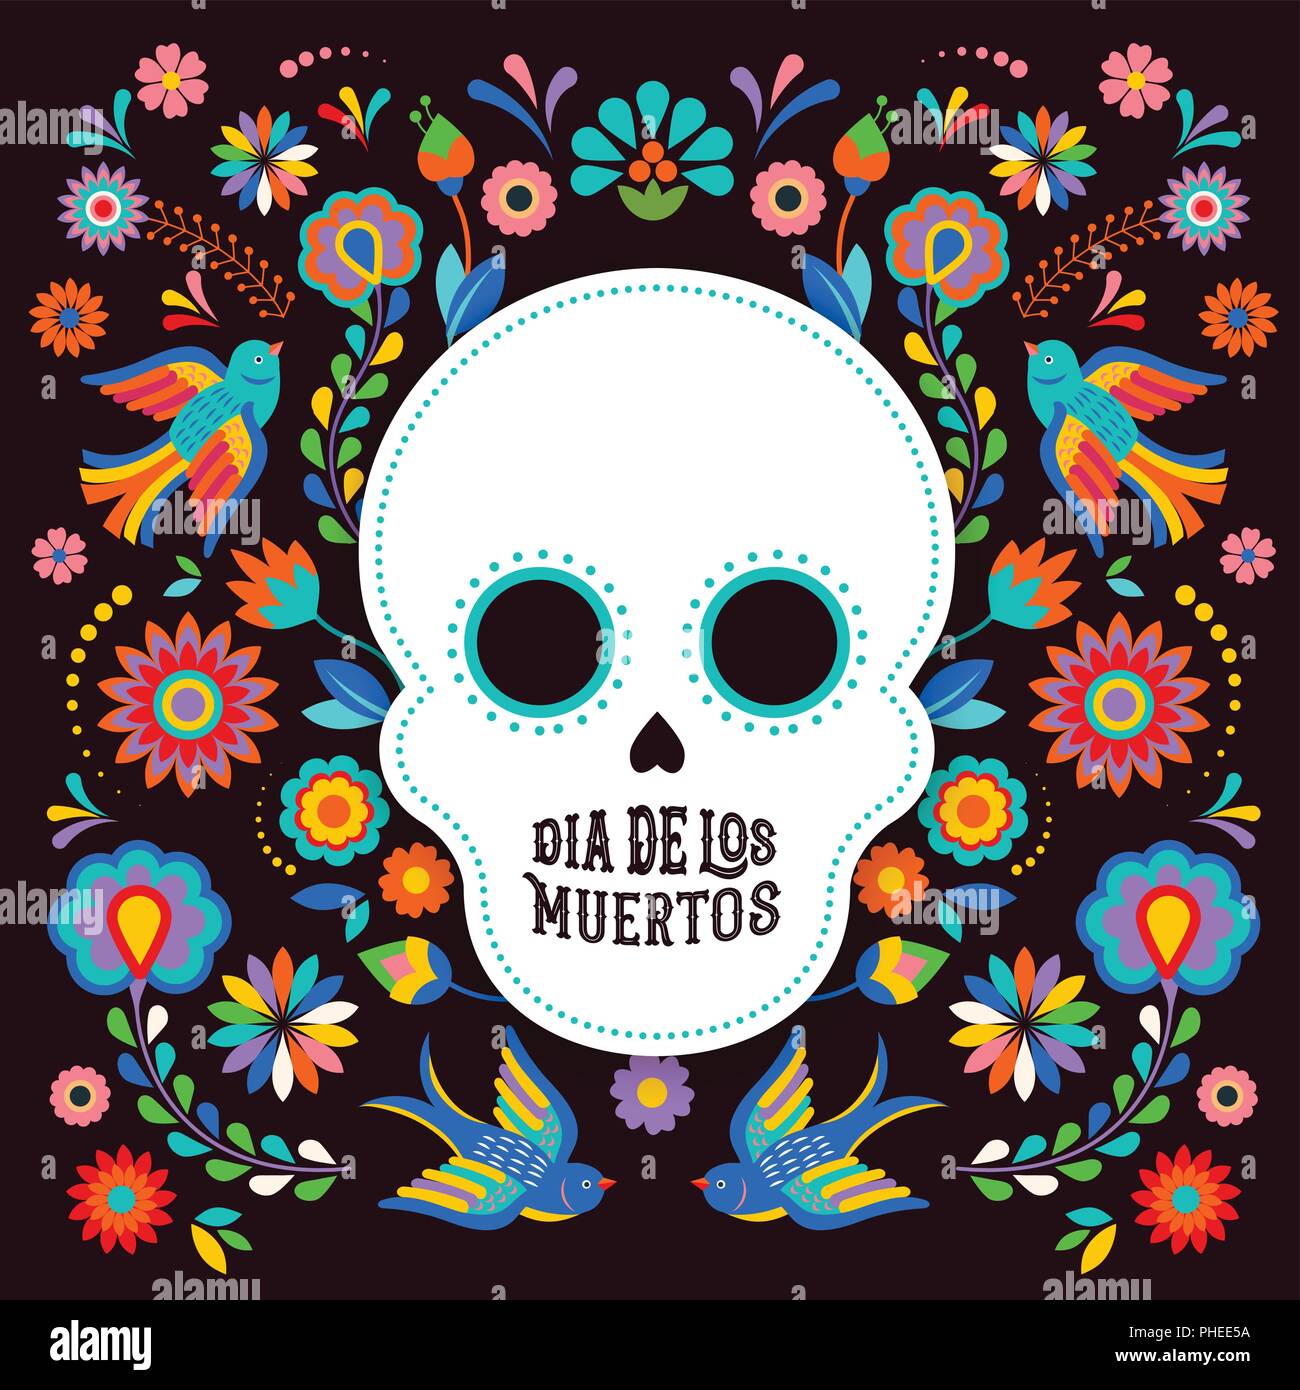 Day of the dead, Dia de los moertos, banner with colorful Mexican ...